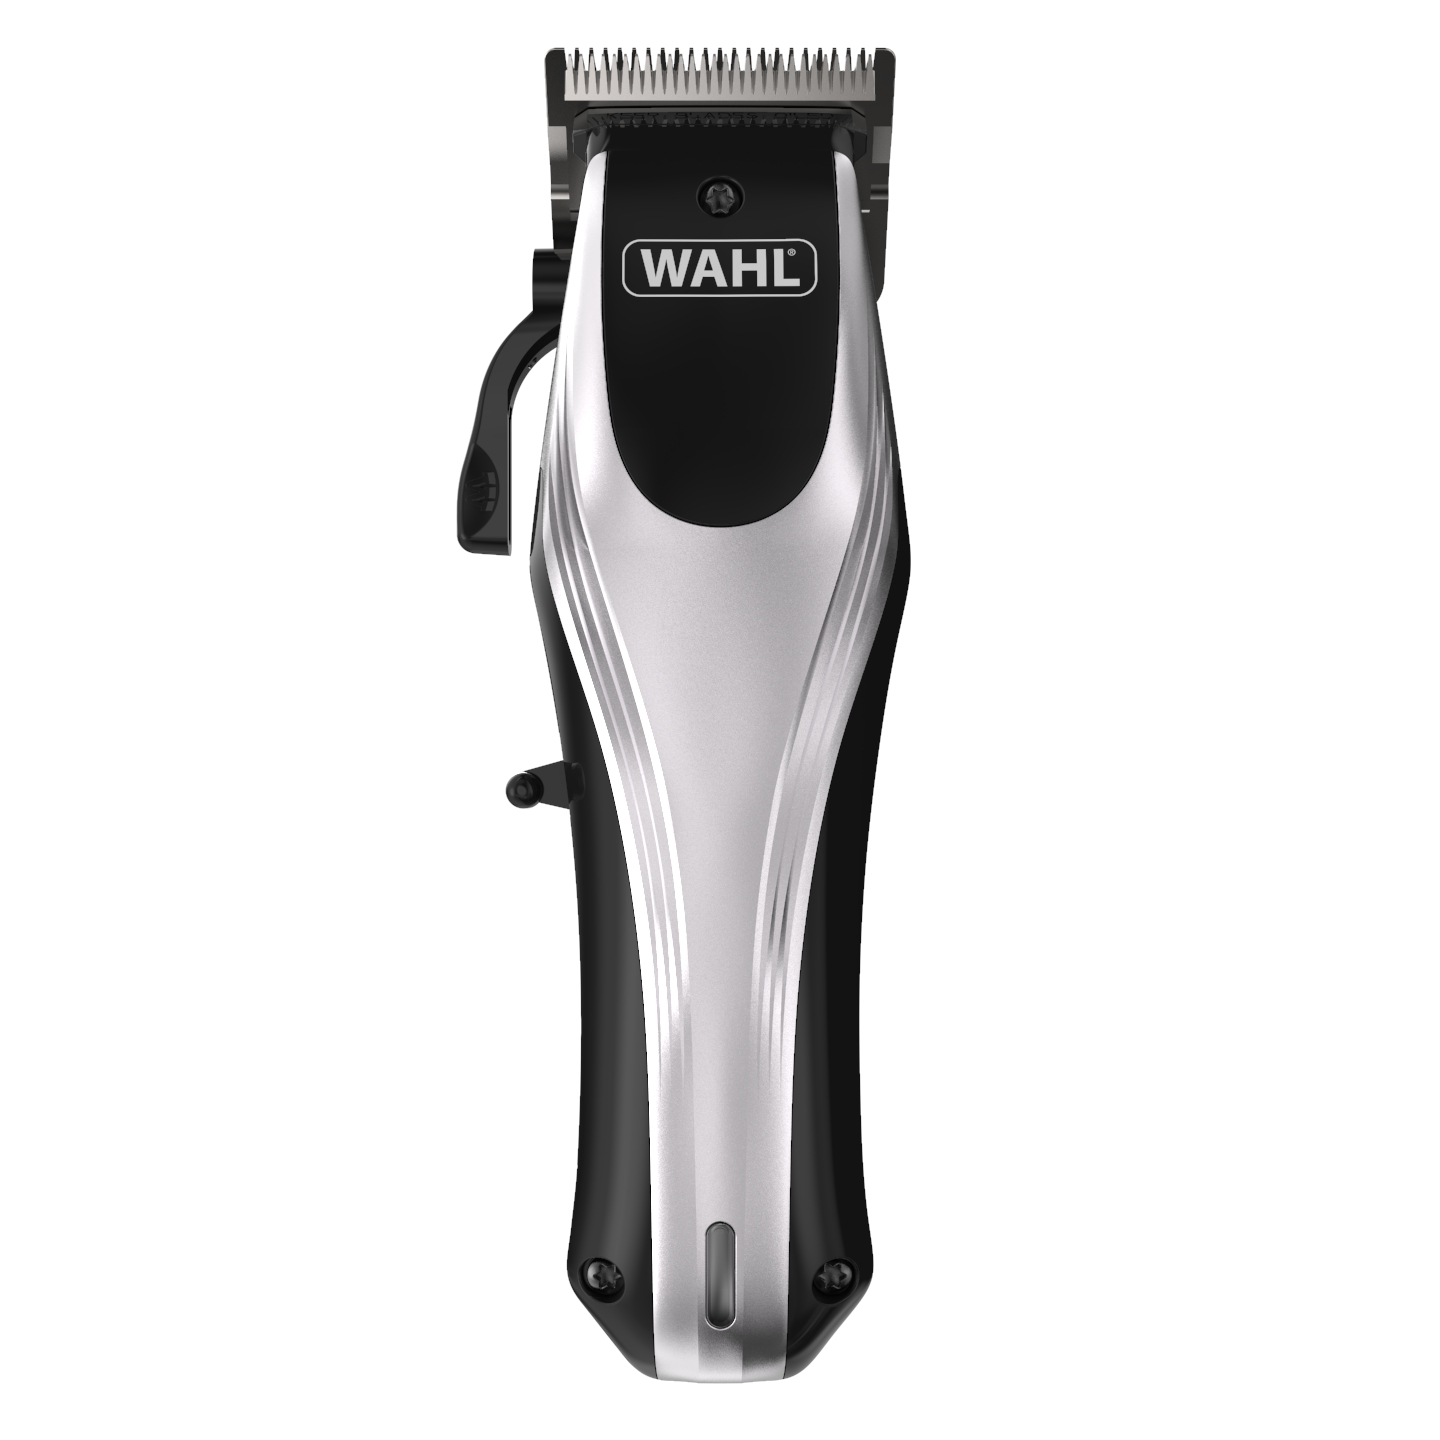 wahl pro clip hair clipper